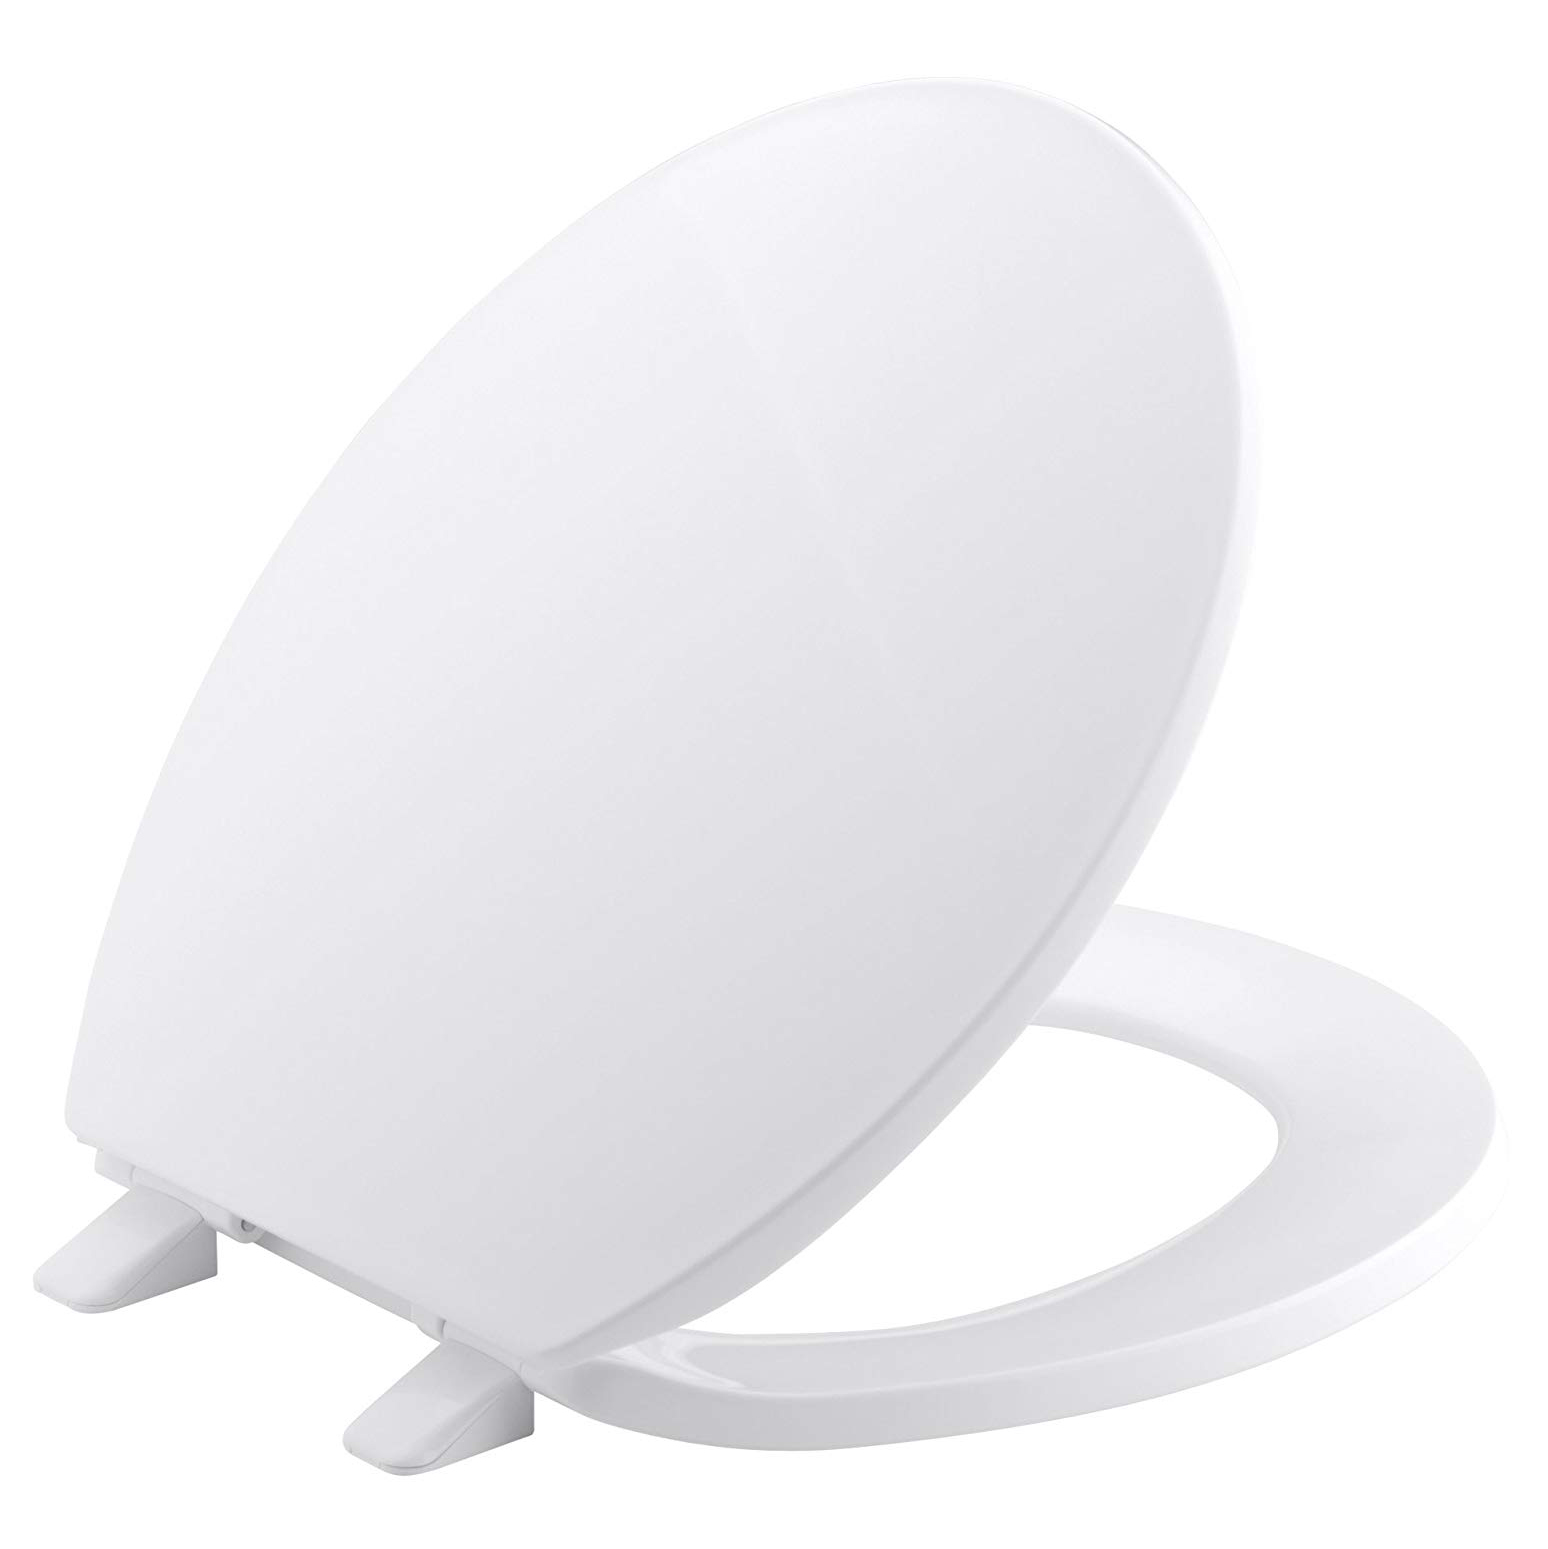 Brevia White Round Toilet Seat w/Quick-Release Hinges